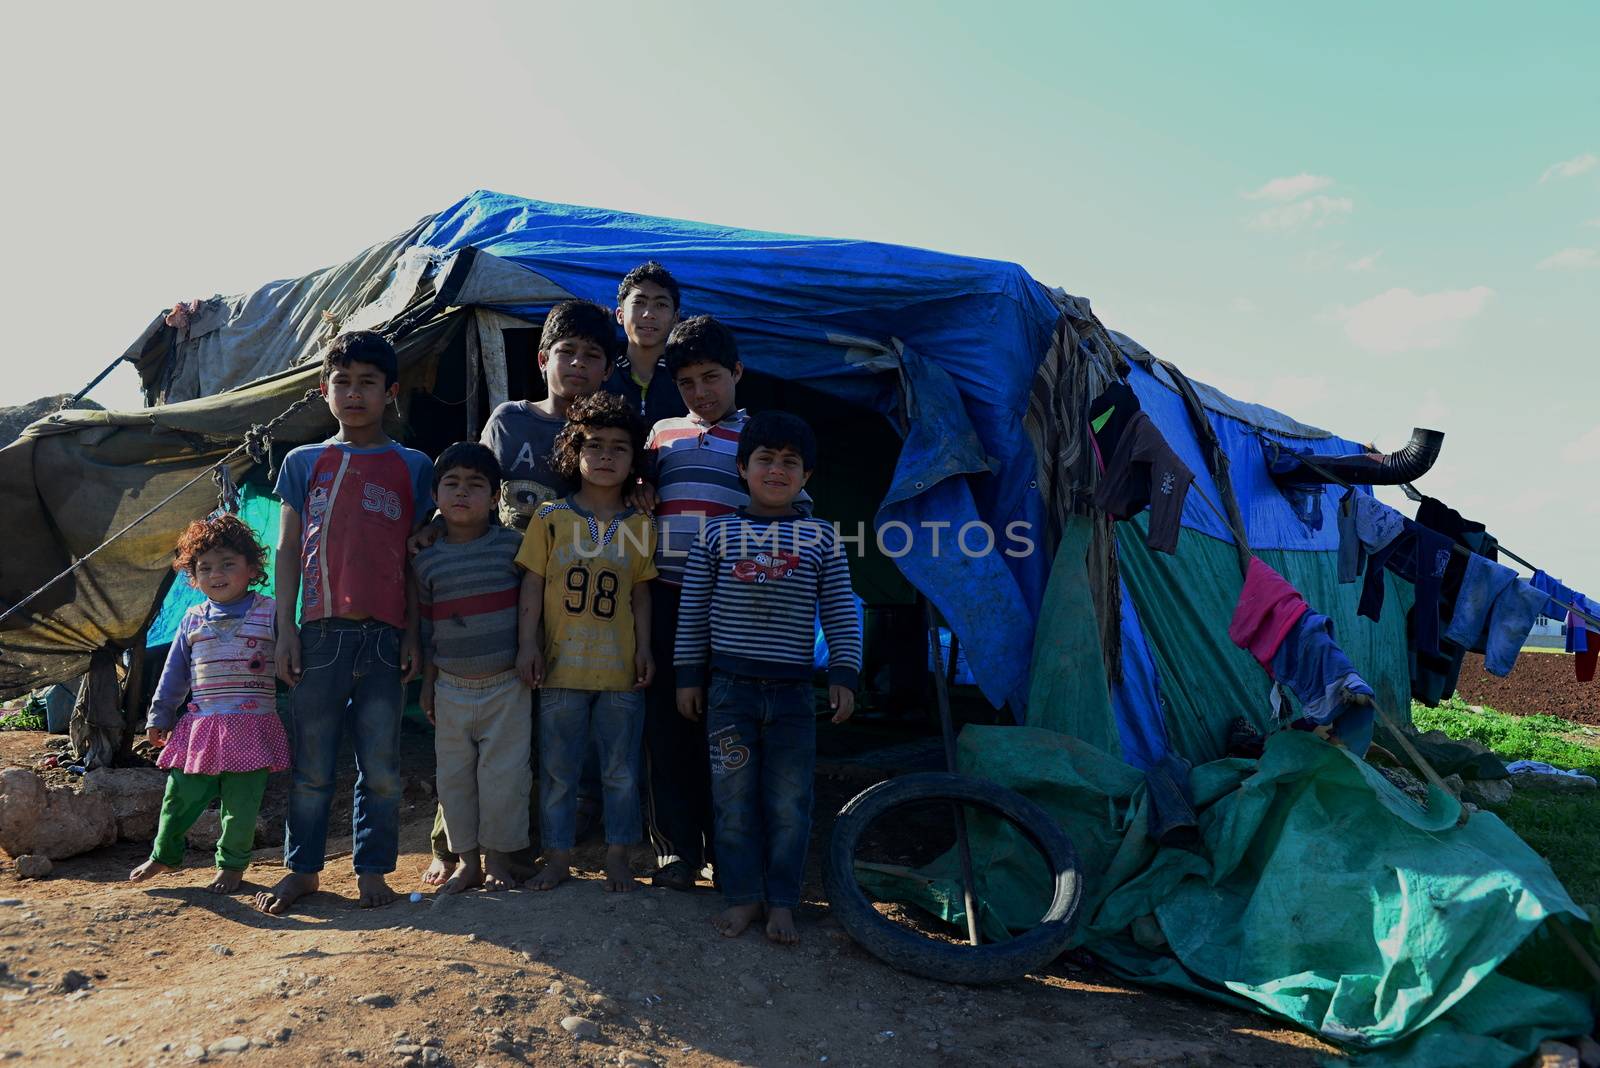 portrait of refugees living homeless in Turkey. 1.4.2015 Reyhanli, Turkey